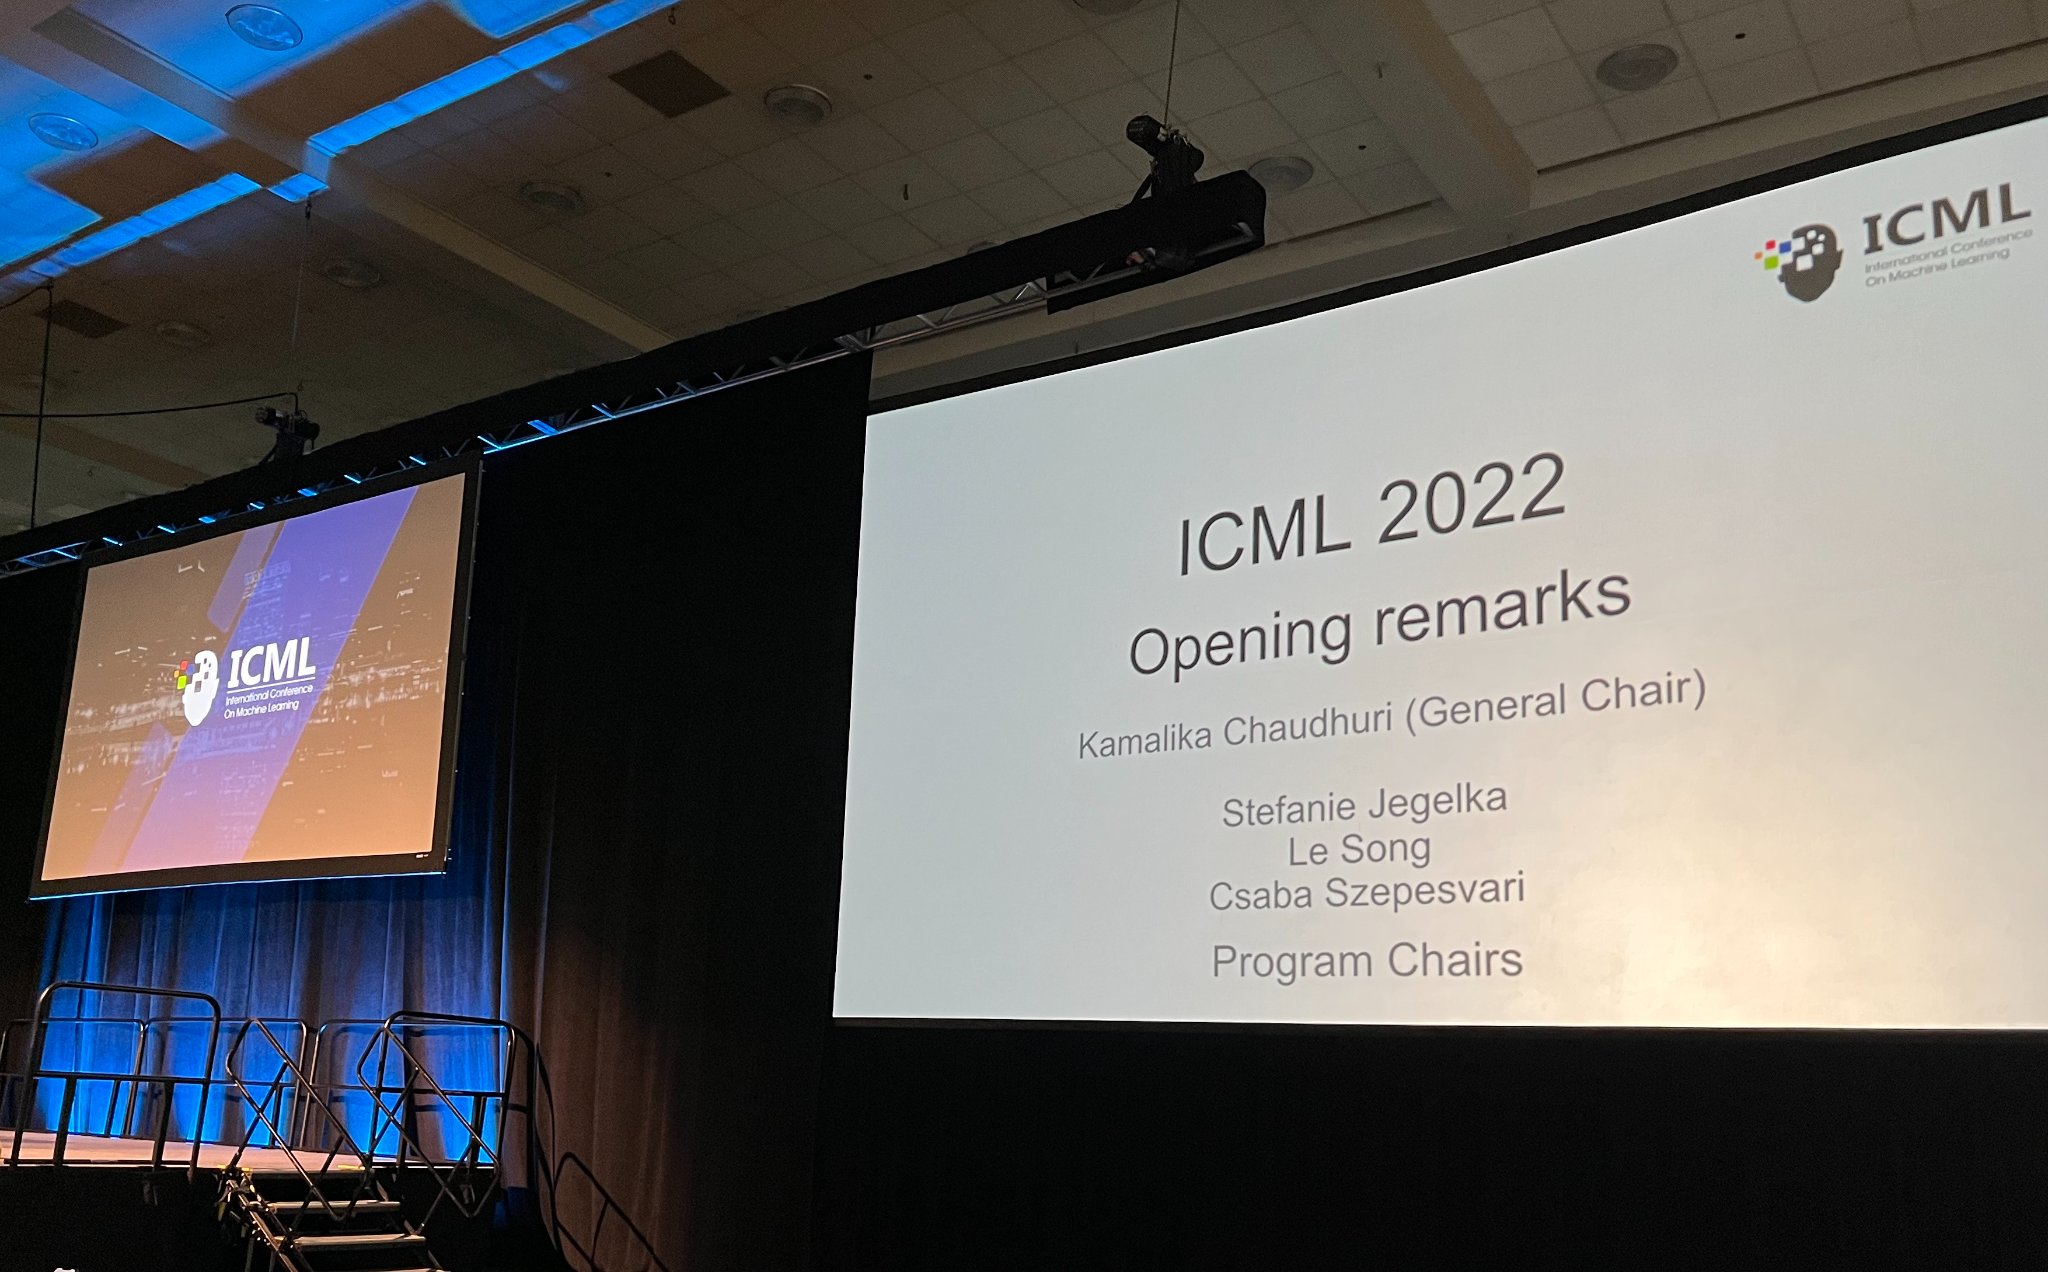 ICML 2022 opening